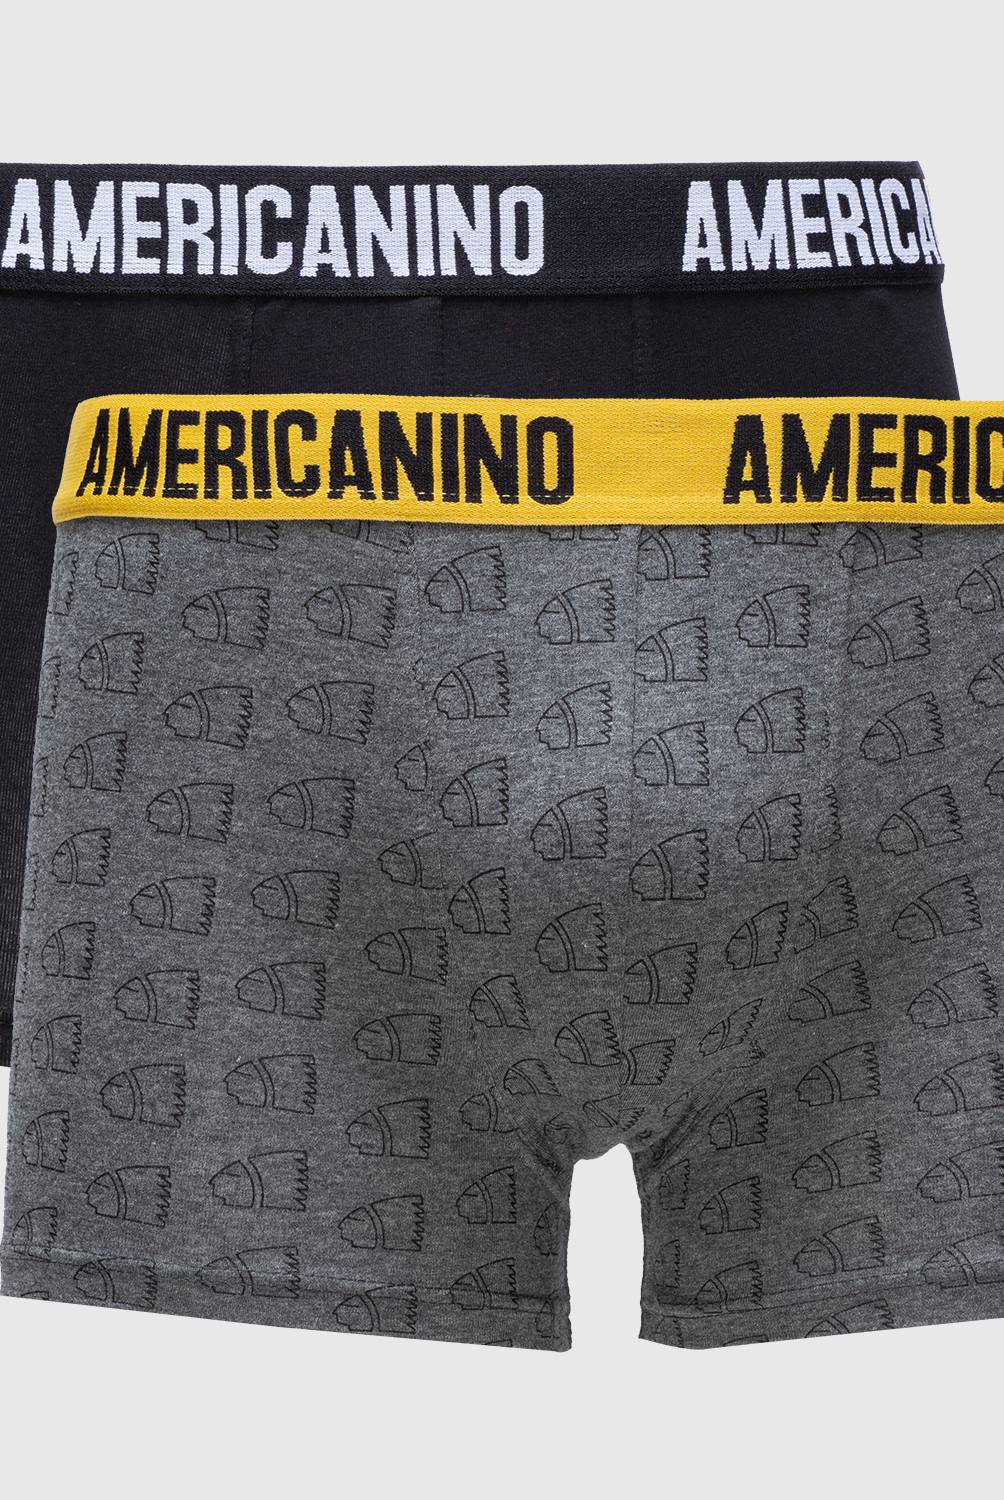 AMERICANINO - Americanino Pack de 2 Boxers